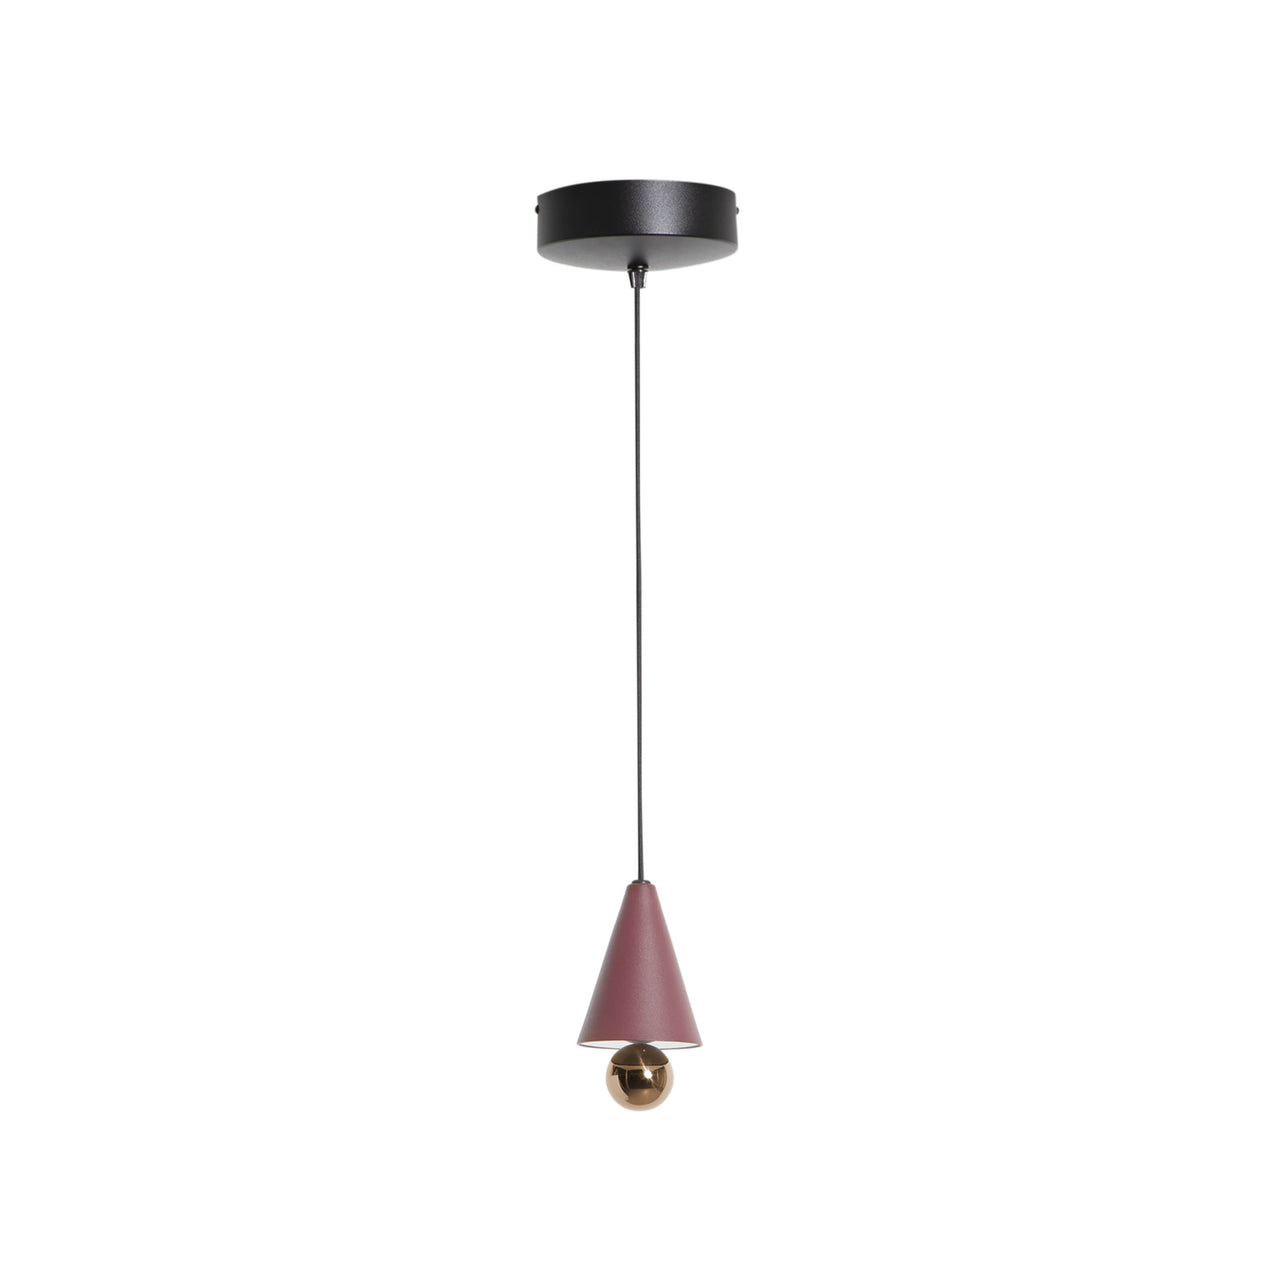 Cherry Pendant Lamp:  Extra small - 3.7